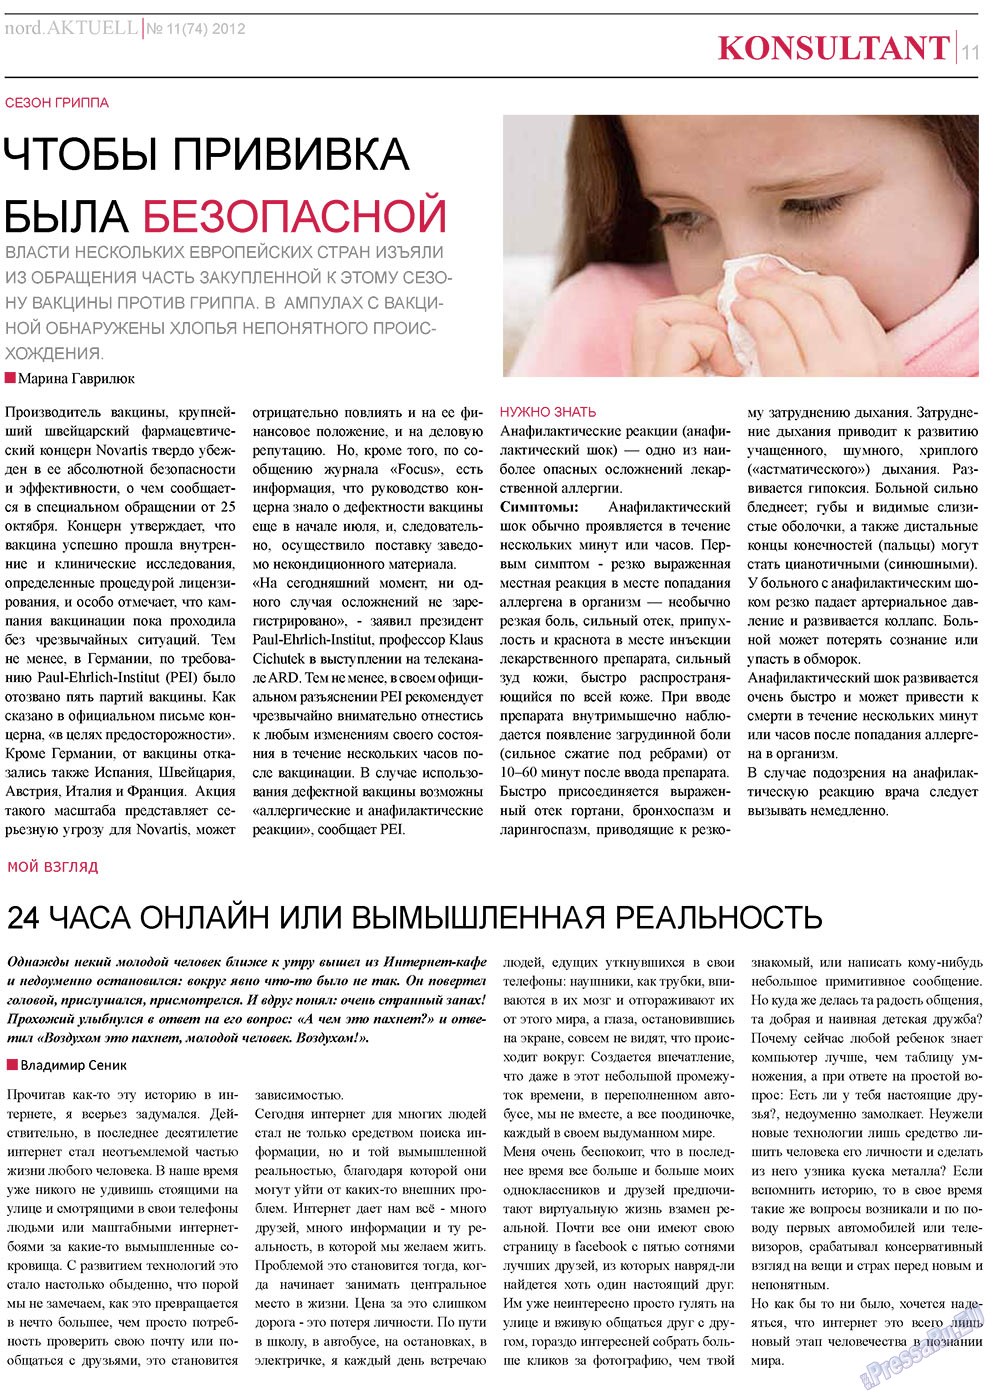 nord.Aktuell, газета. 2012 №11 стр.11